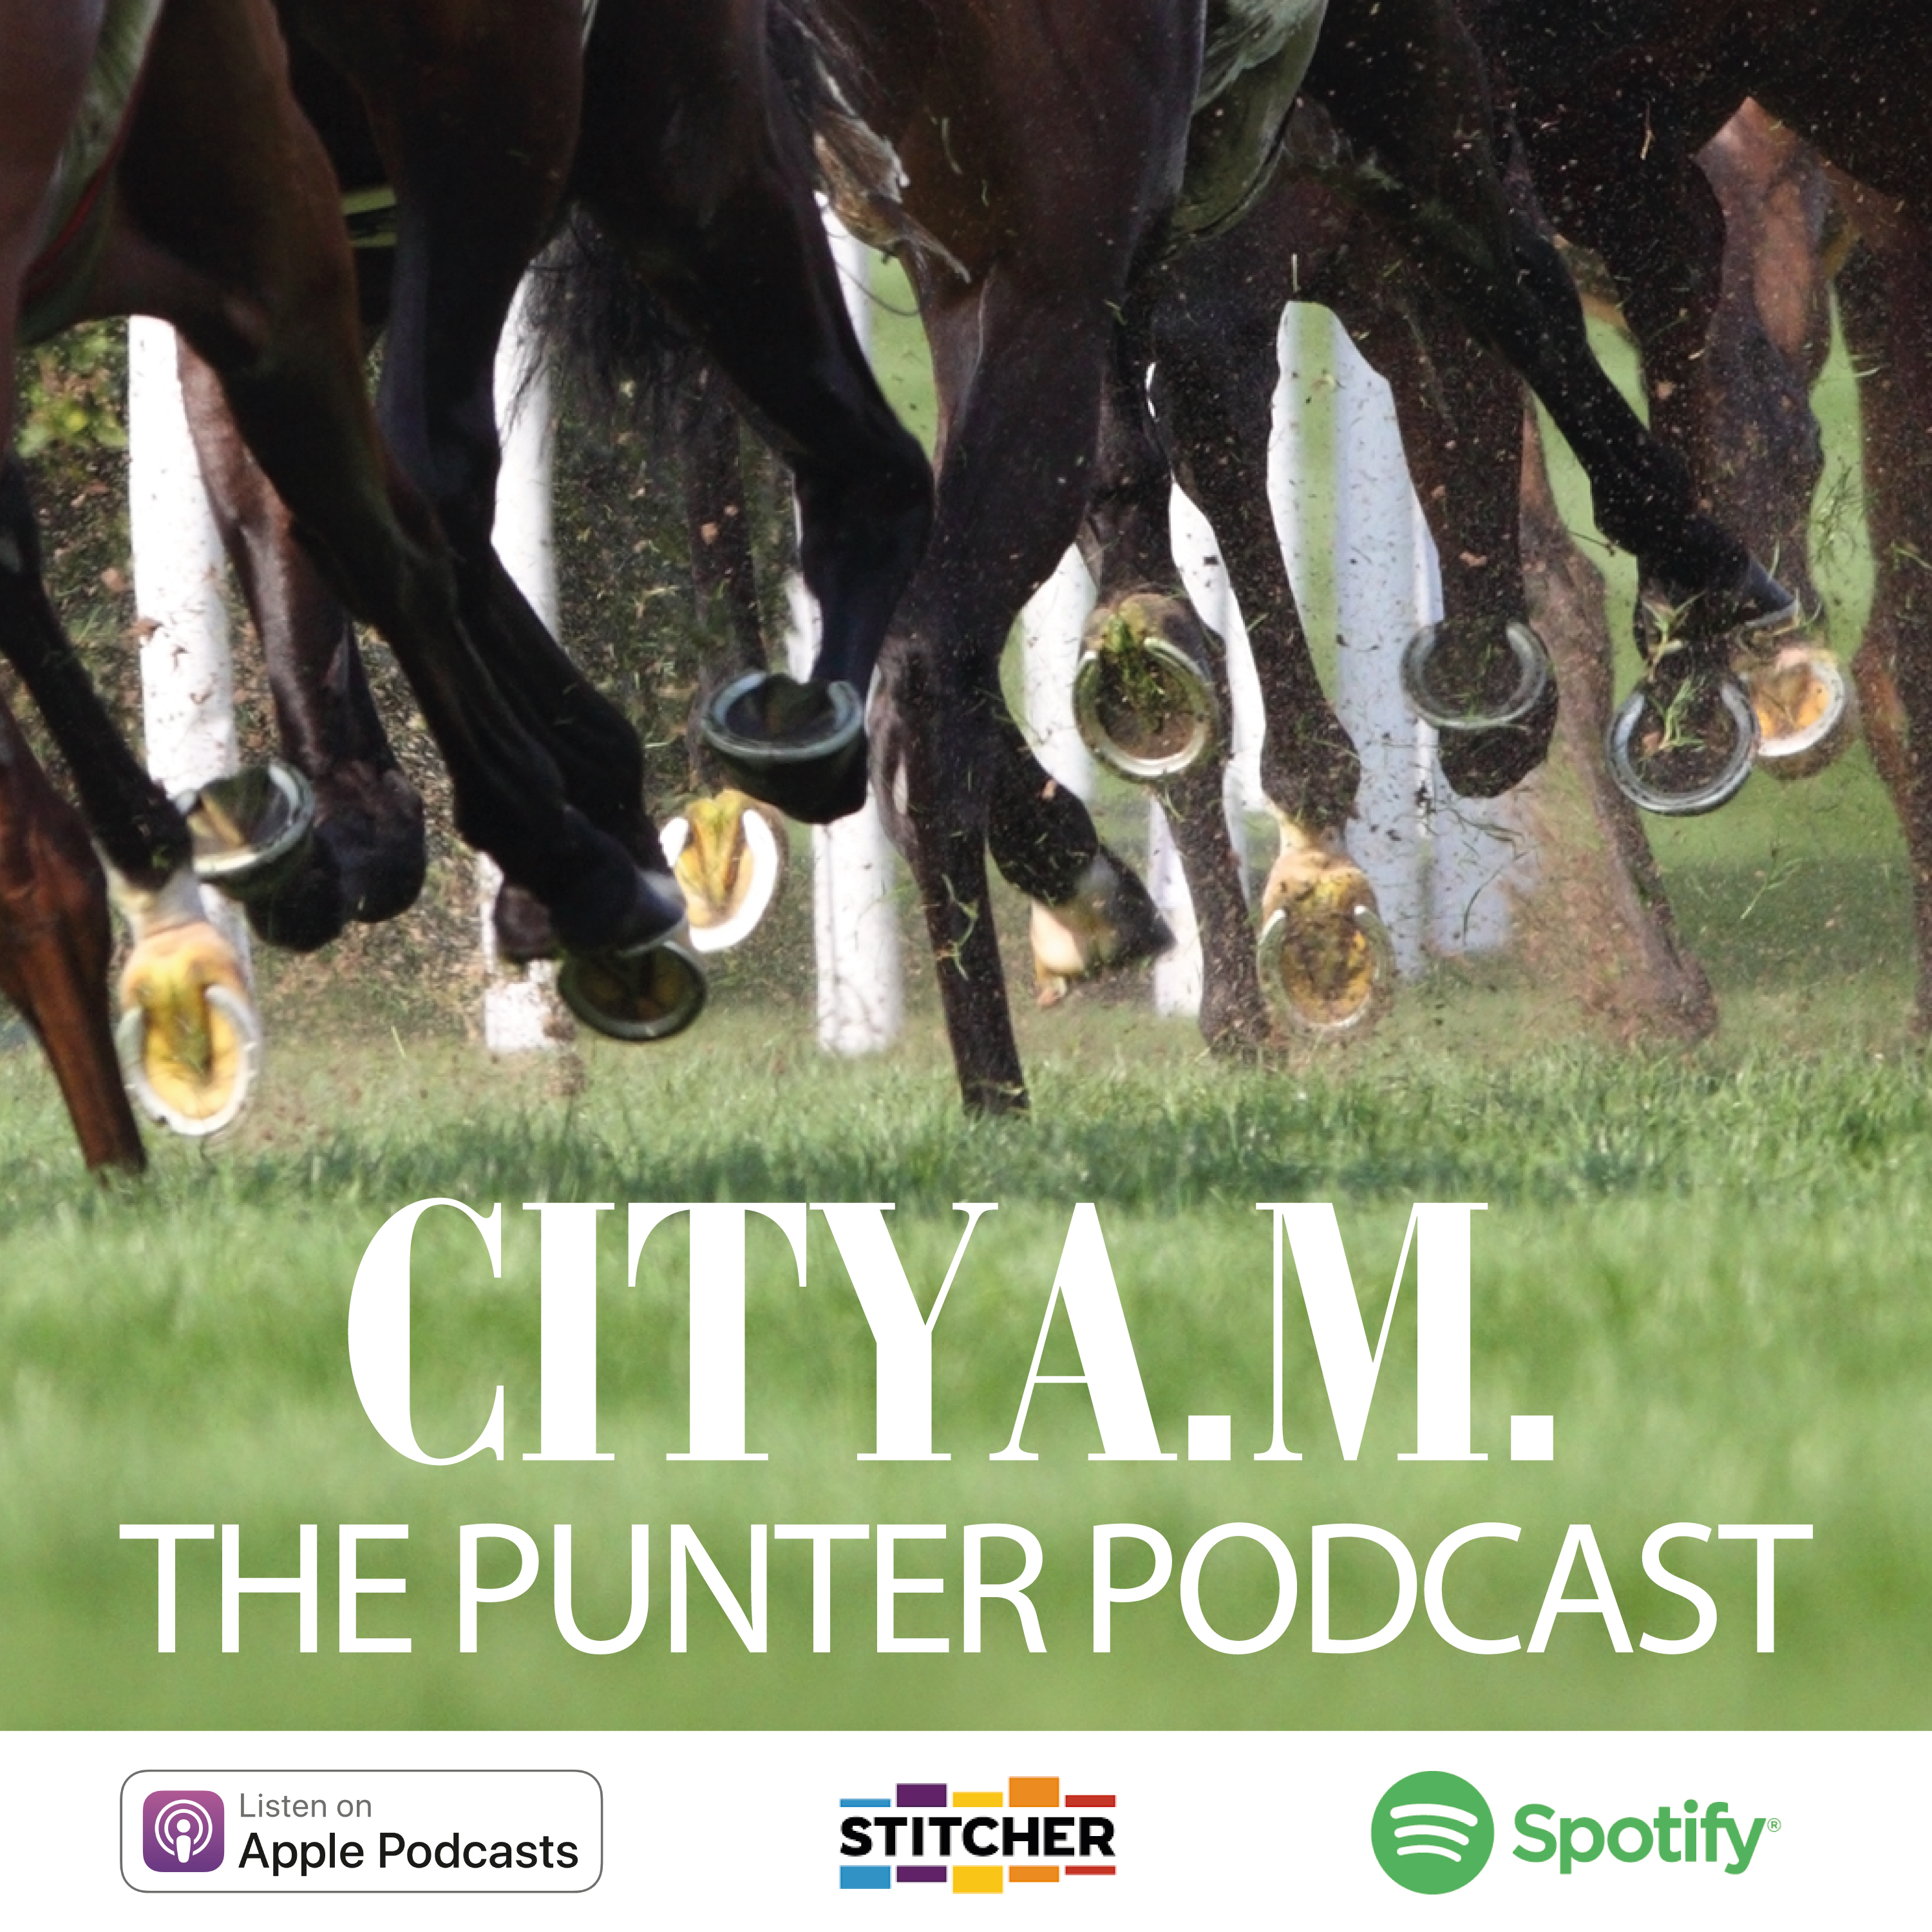 February 4th - Punter Podcast Summary